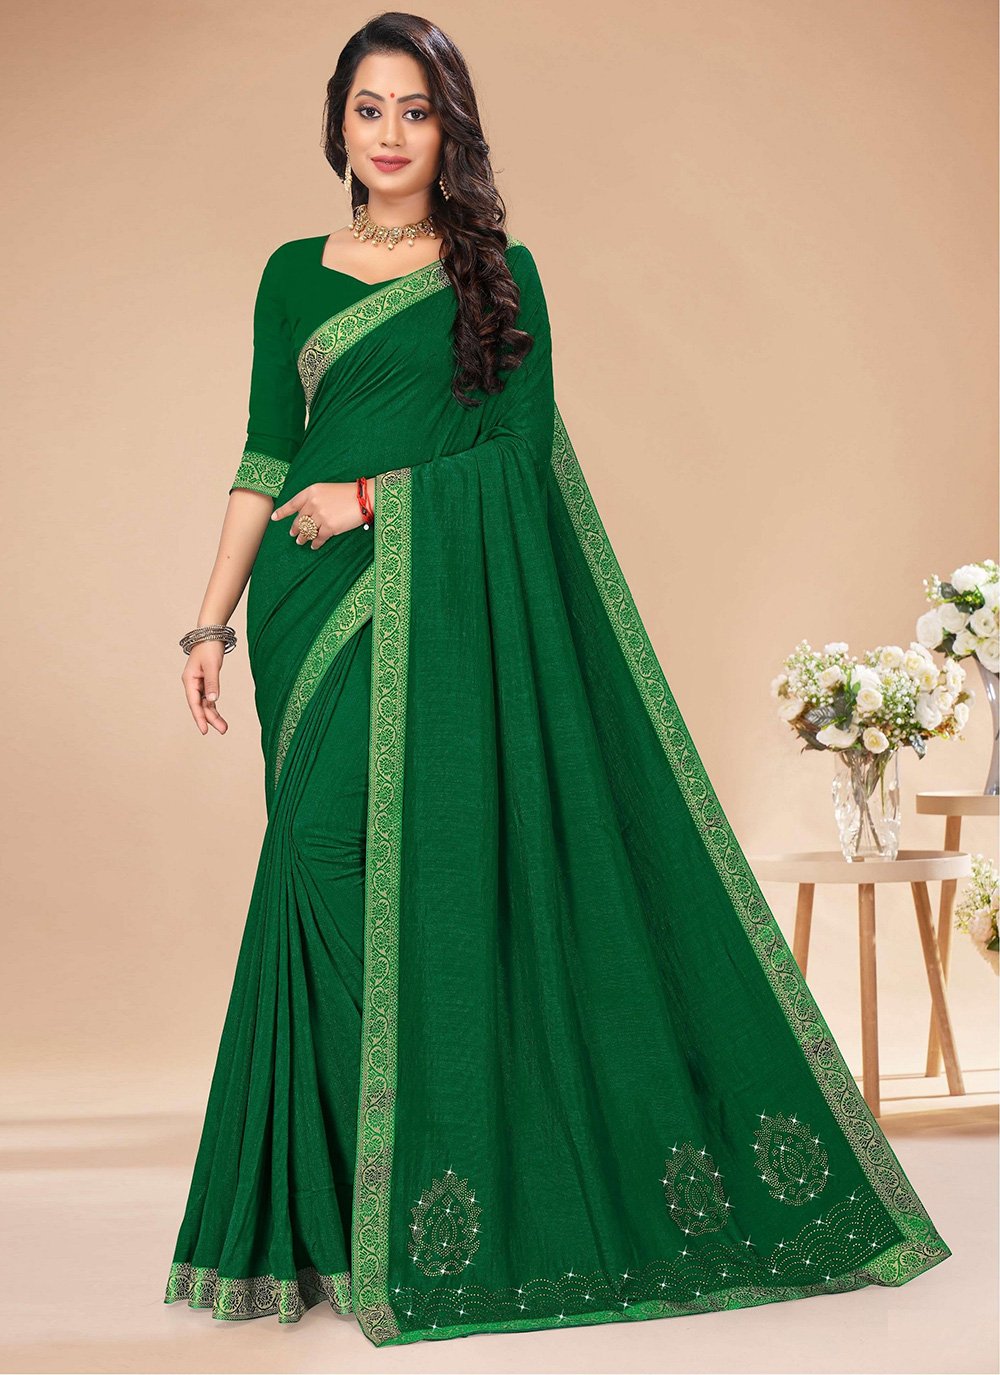 Lace Vichitra Silk Traditional Saree in Green